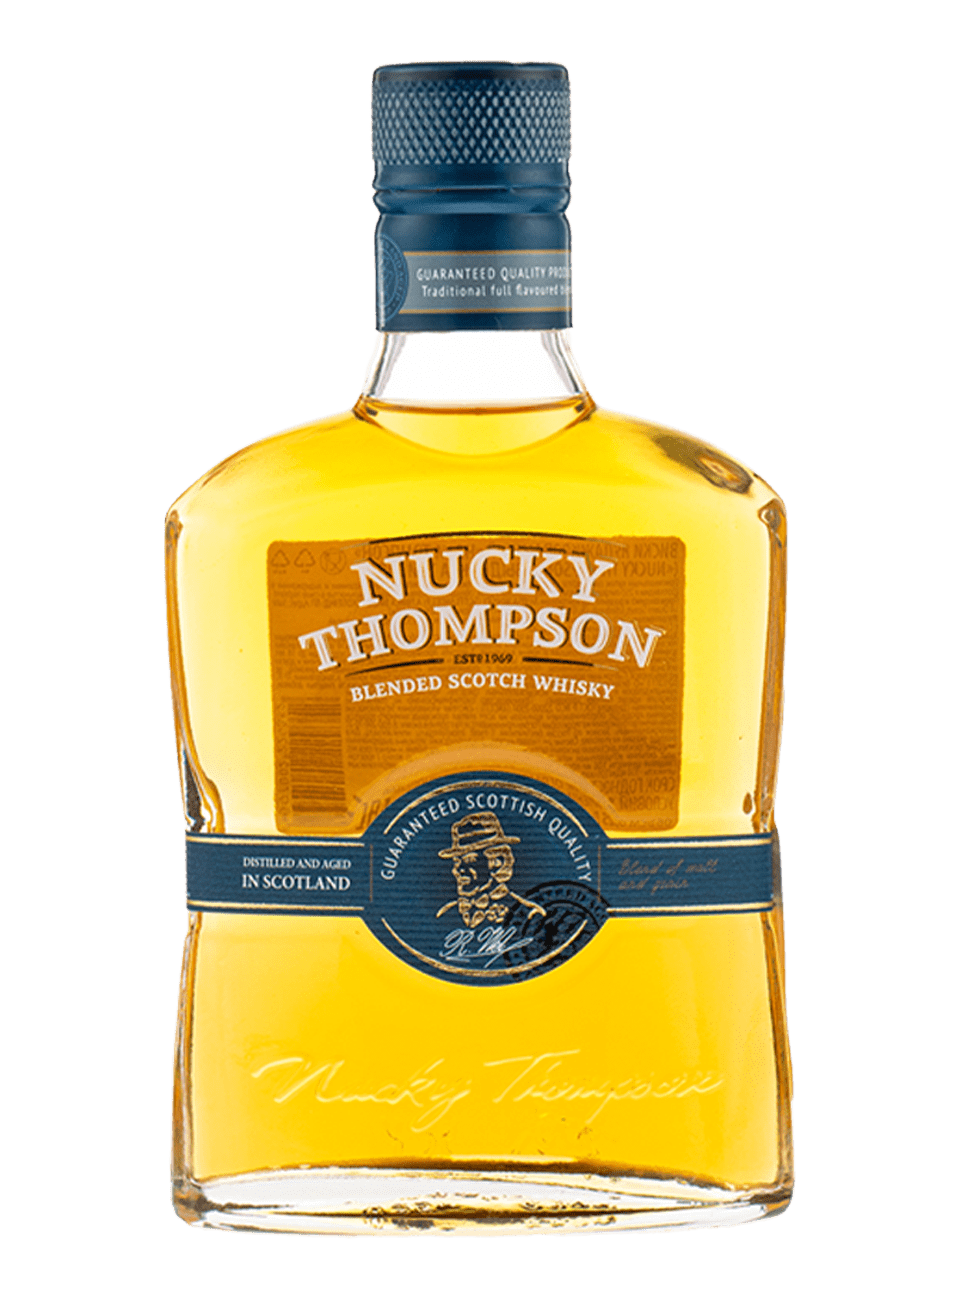 Nucky thompson 0.7 цена. Наки Томпсон виски. Ставропольский виски Nucky Thompson. Наки Томпсон виски яблочный. Виски Наки Томпсон набор.